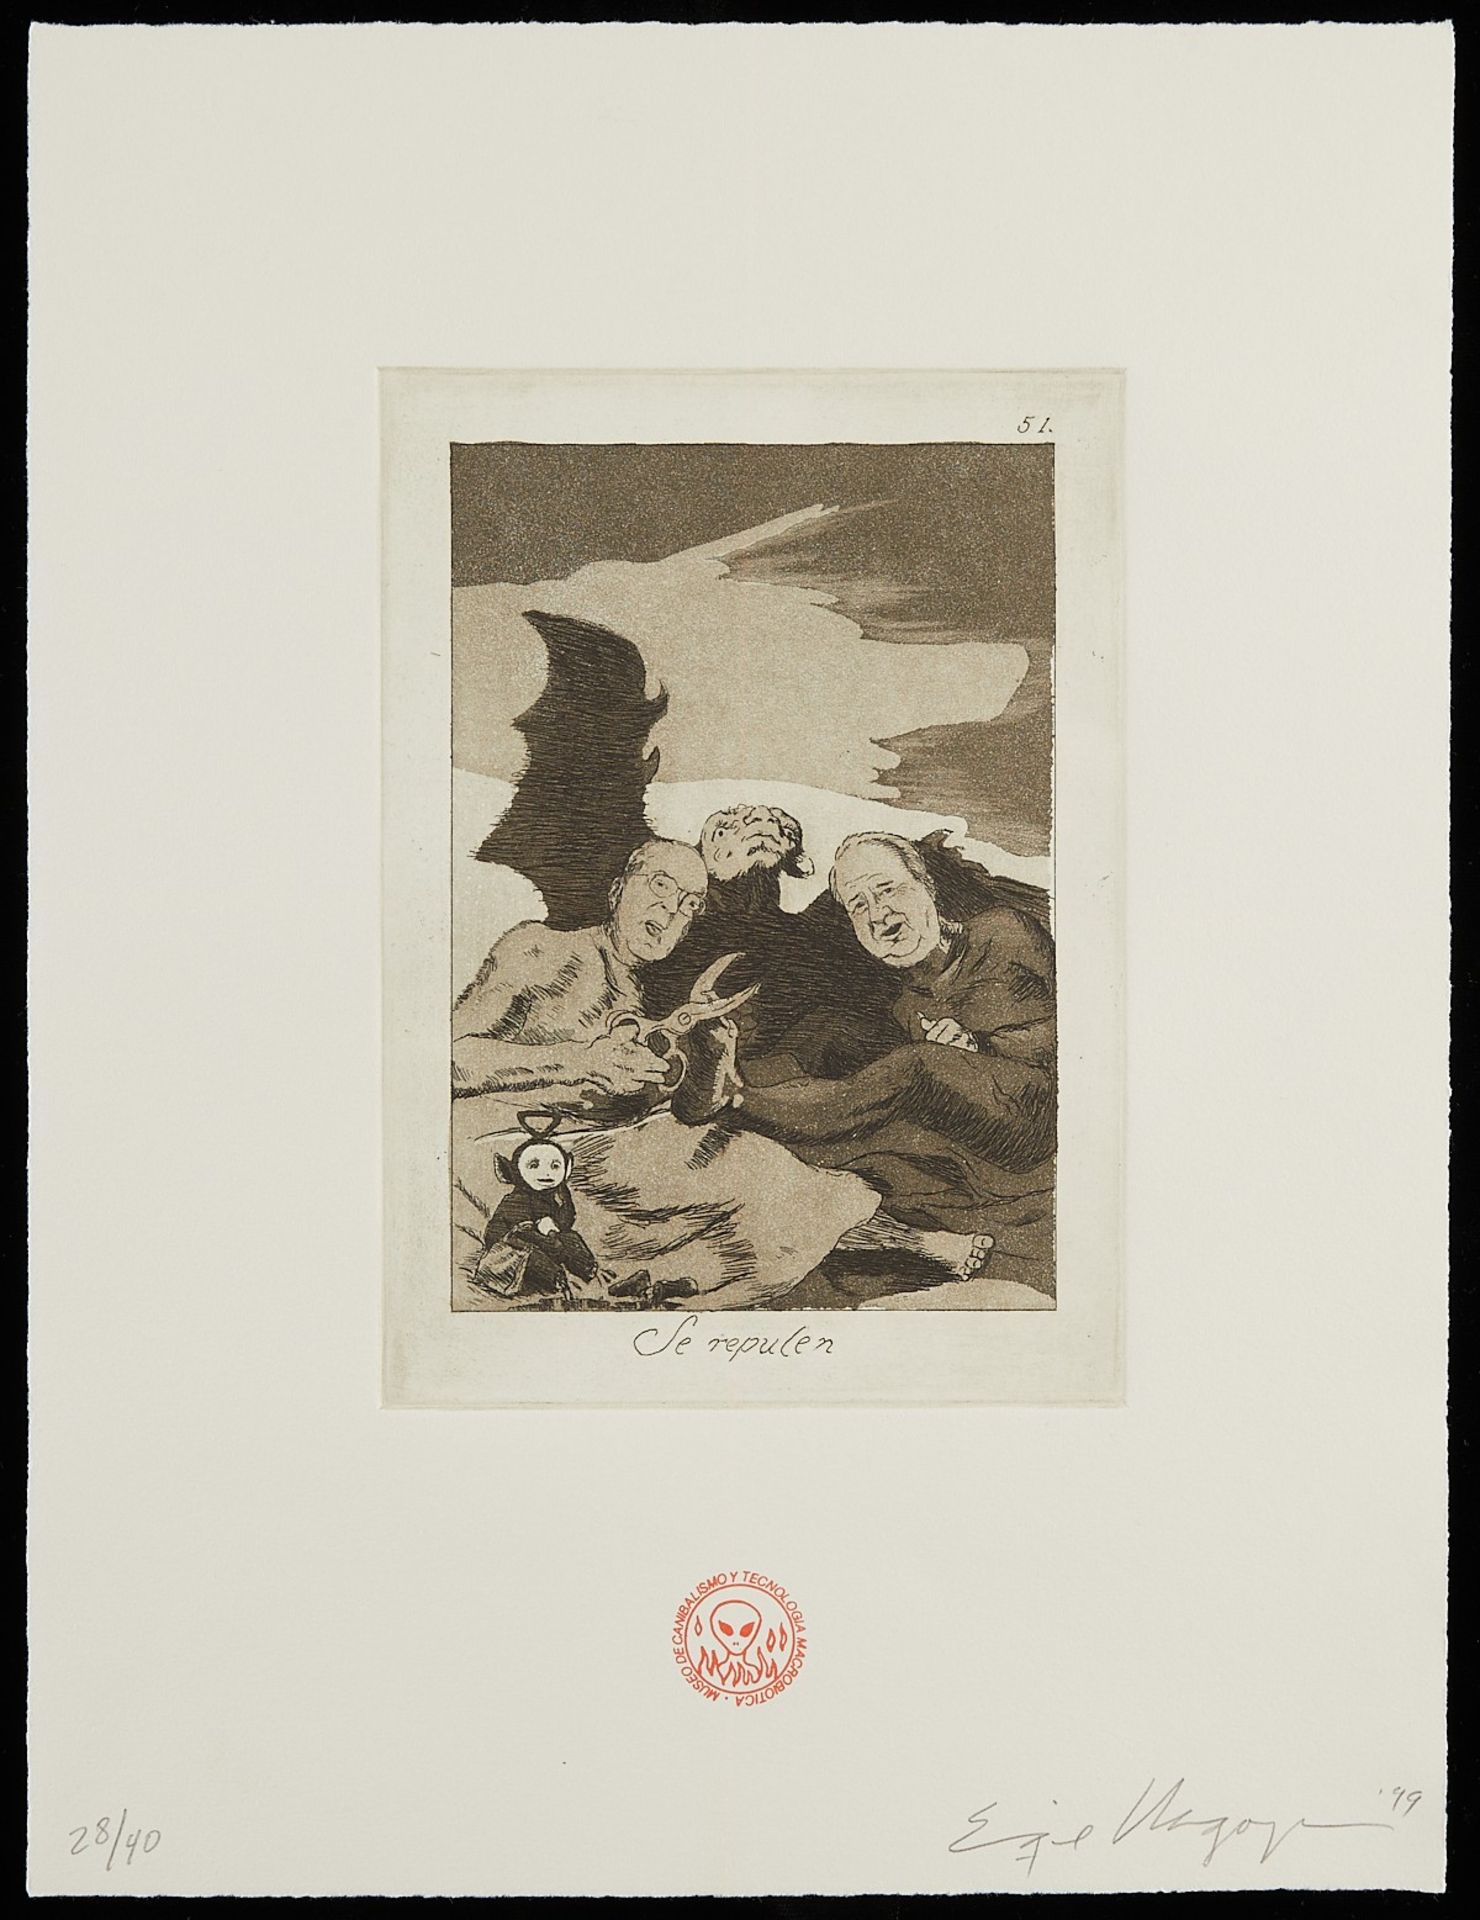 Grp: 8 Chagoya "Return To Goya's Caprichos" Suite - Image 8 of 40